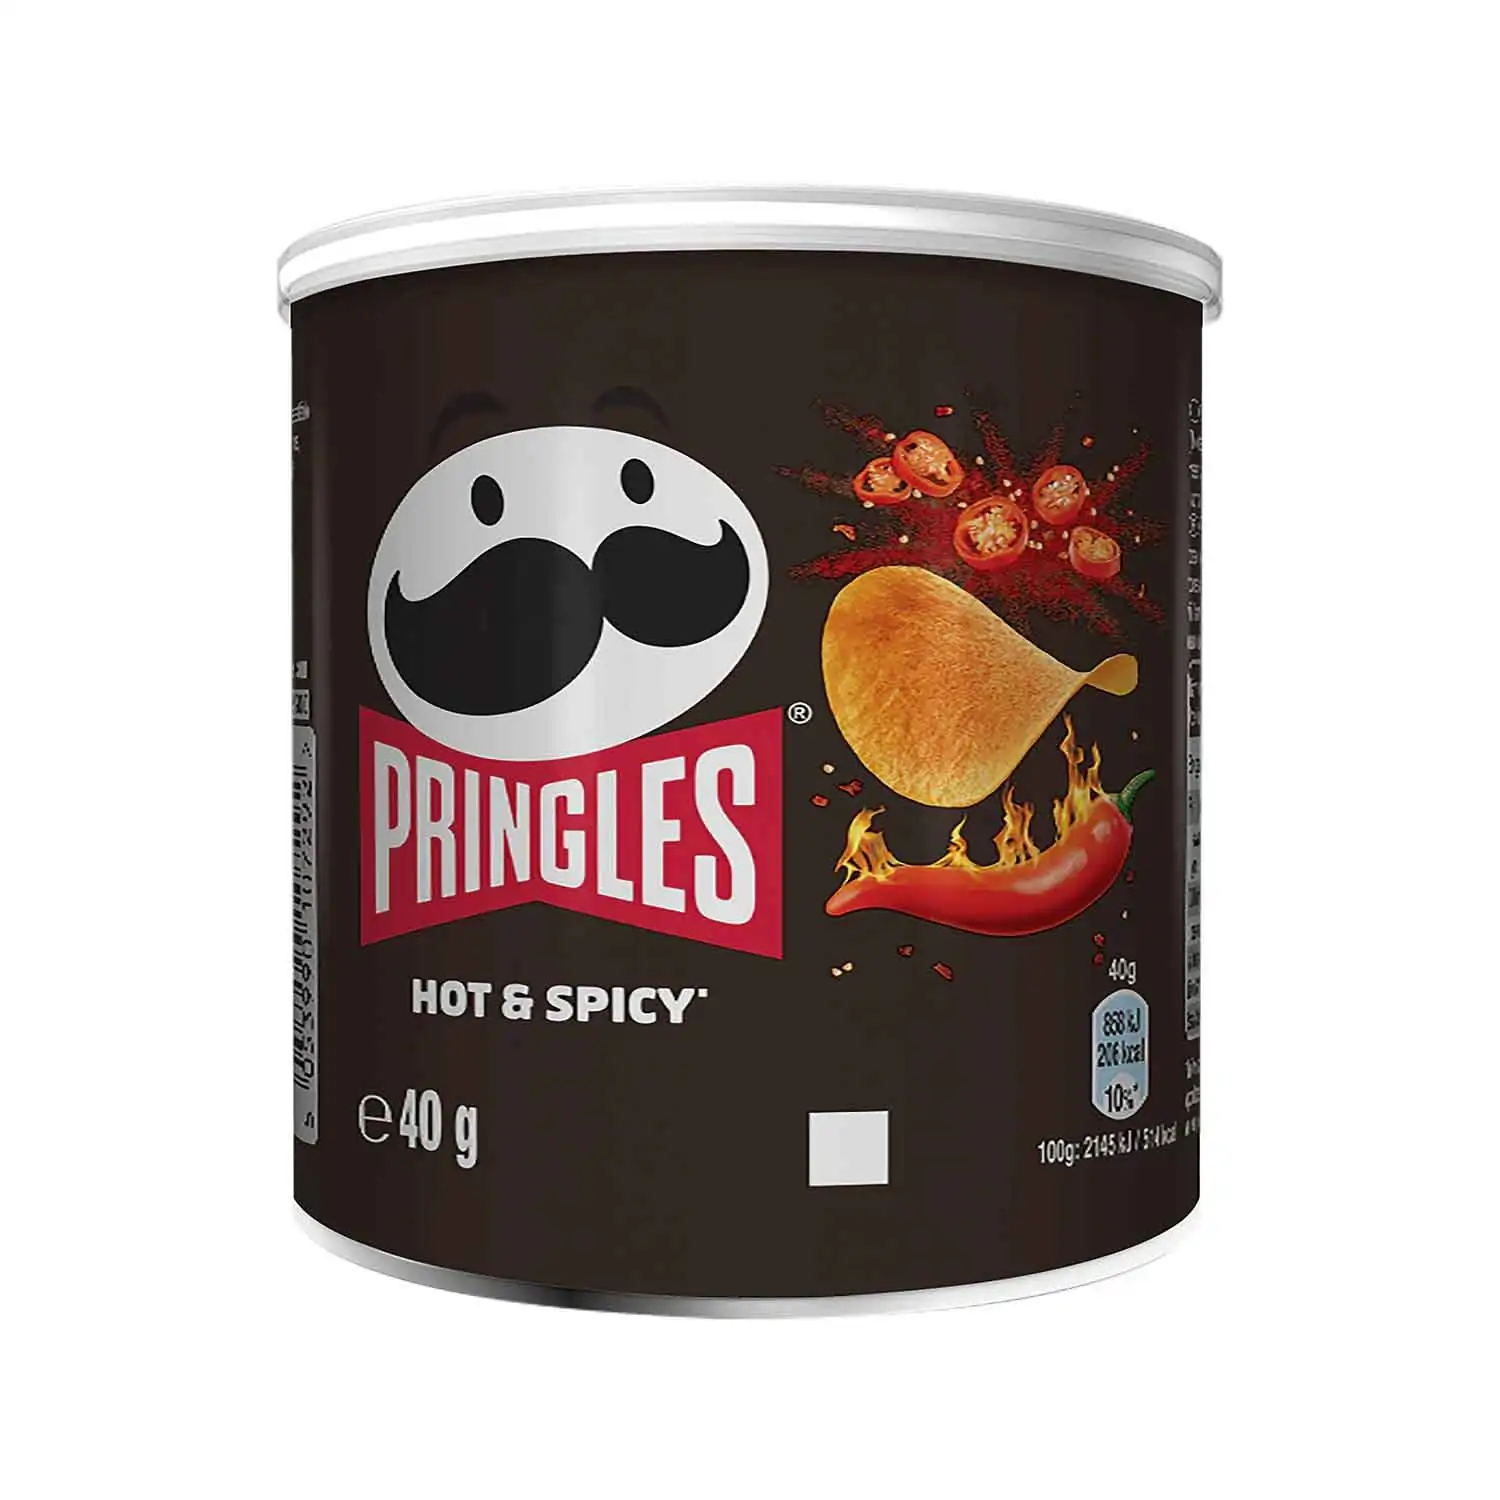 Pringles hot & spicy 40g 